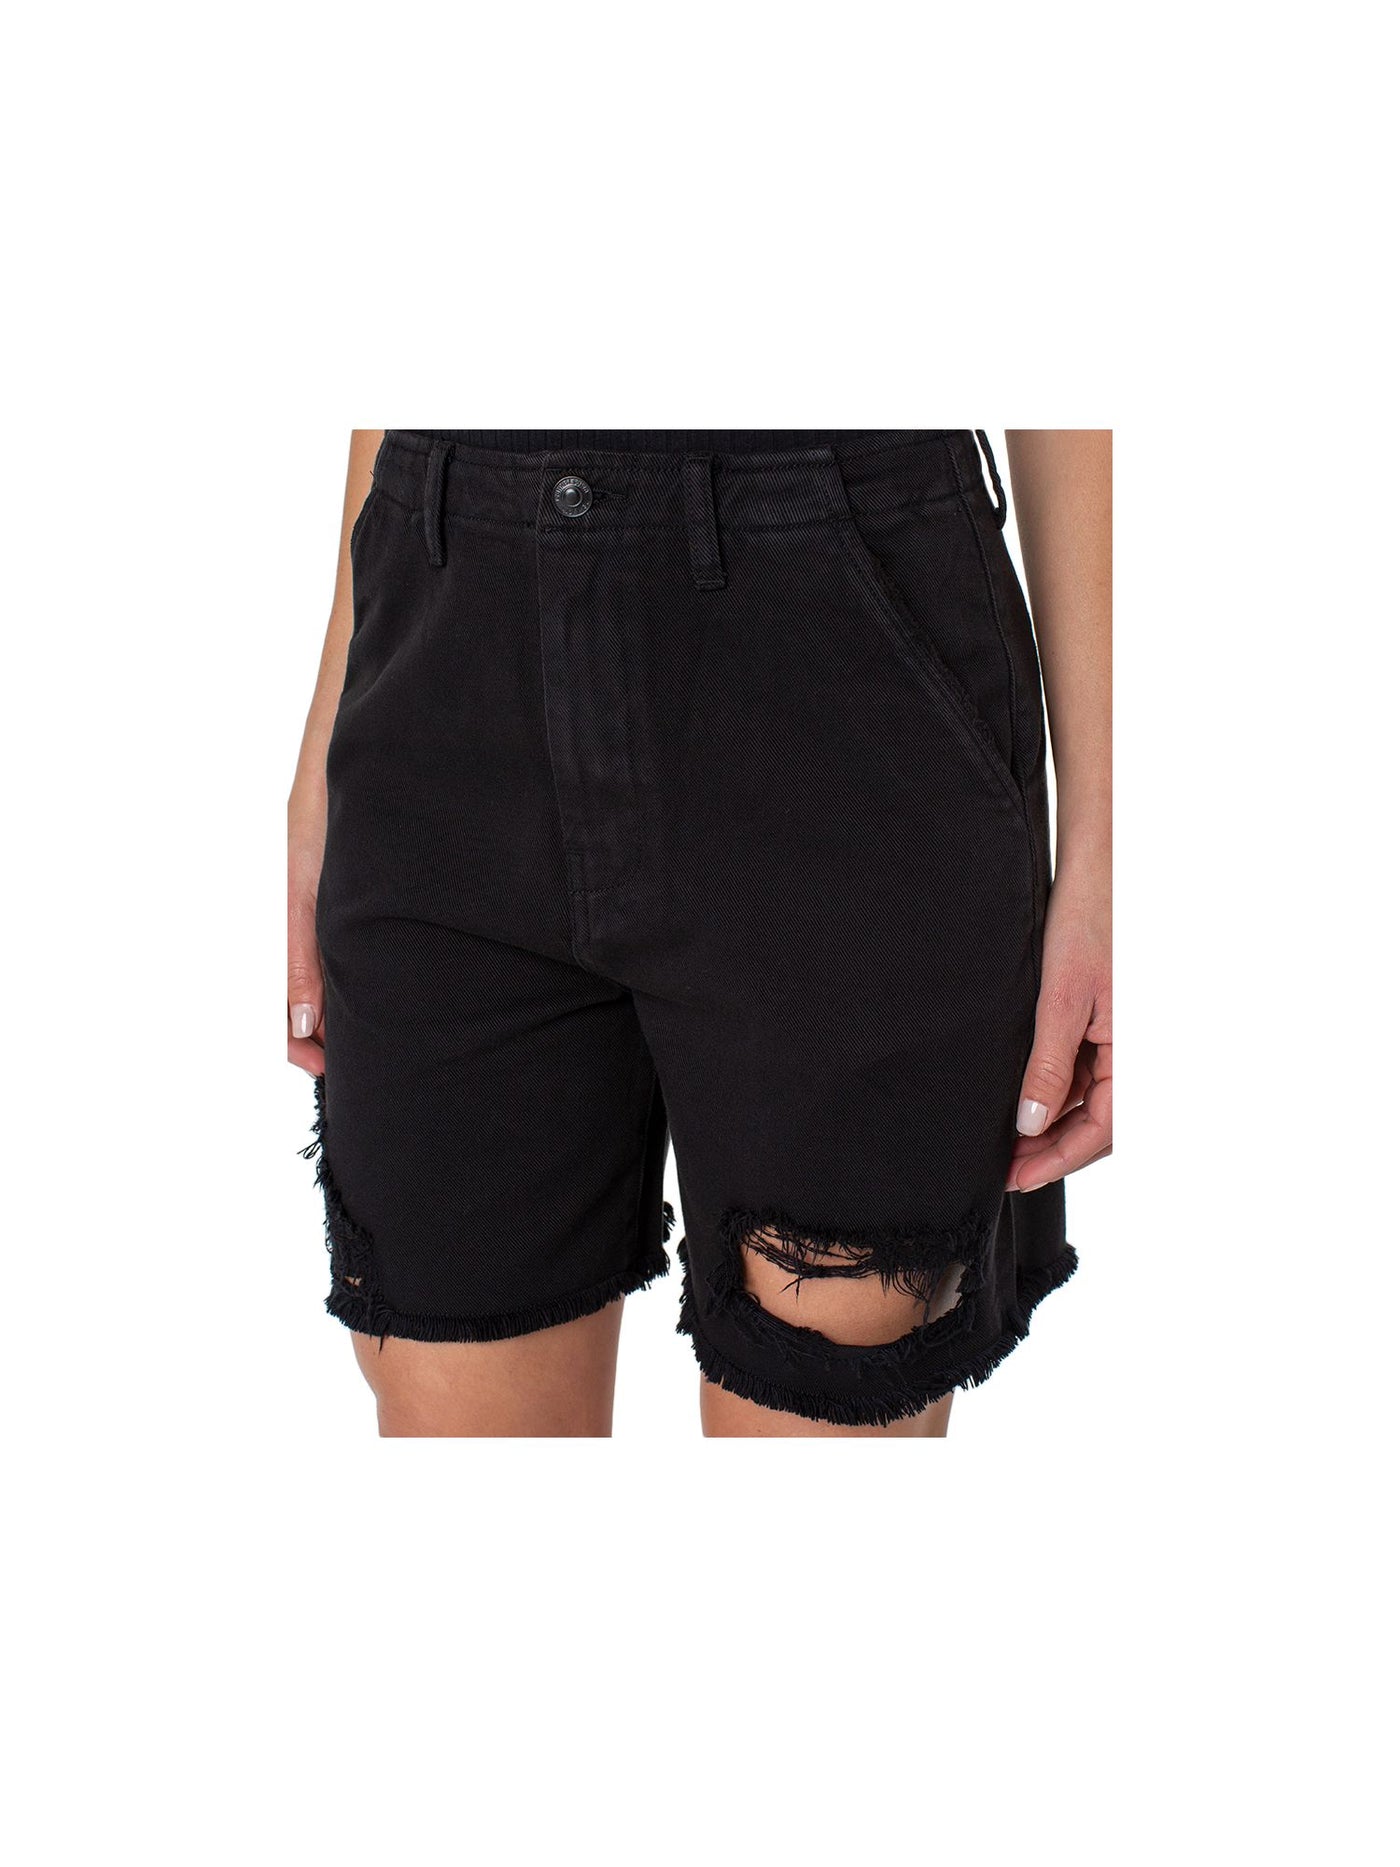 EARNEST SEWN NEW YORK Womens Black Denim Zippered Pocketed Frayed Hems High Waist Shorts 27